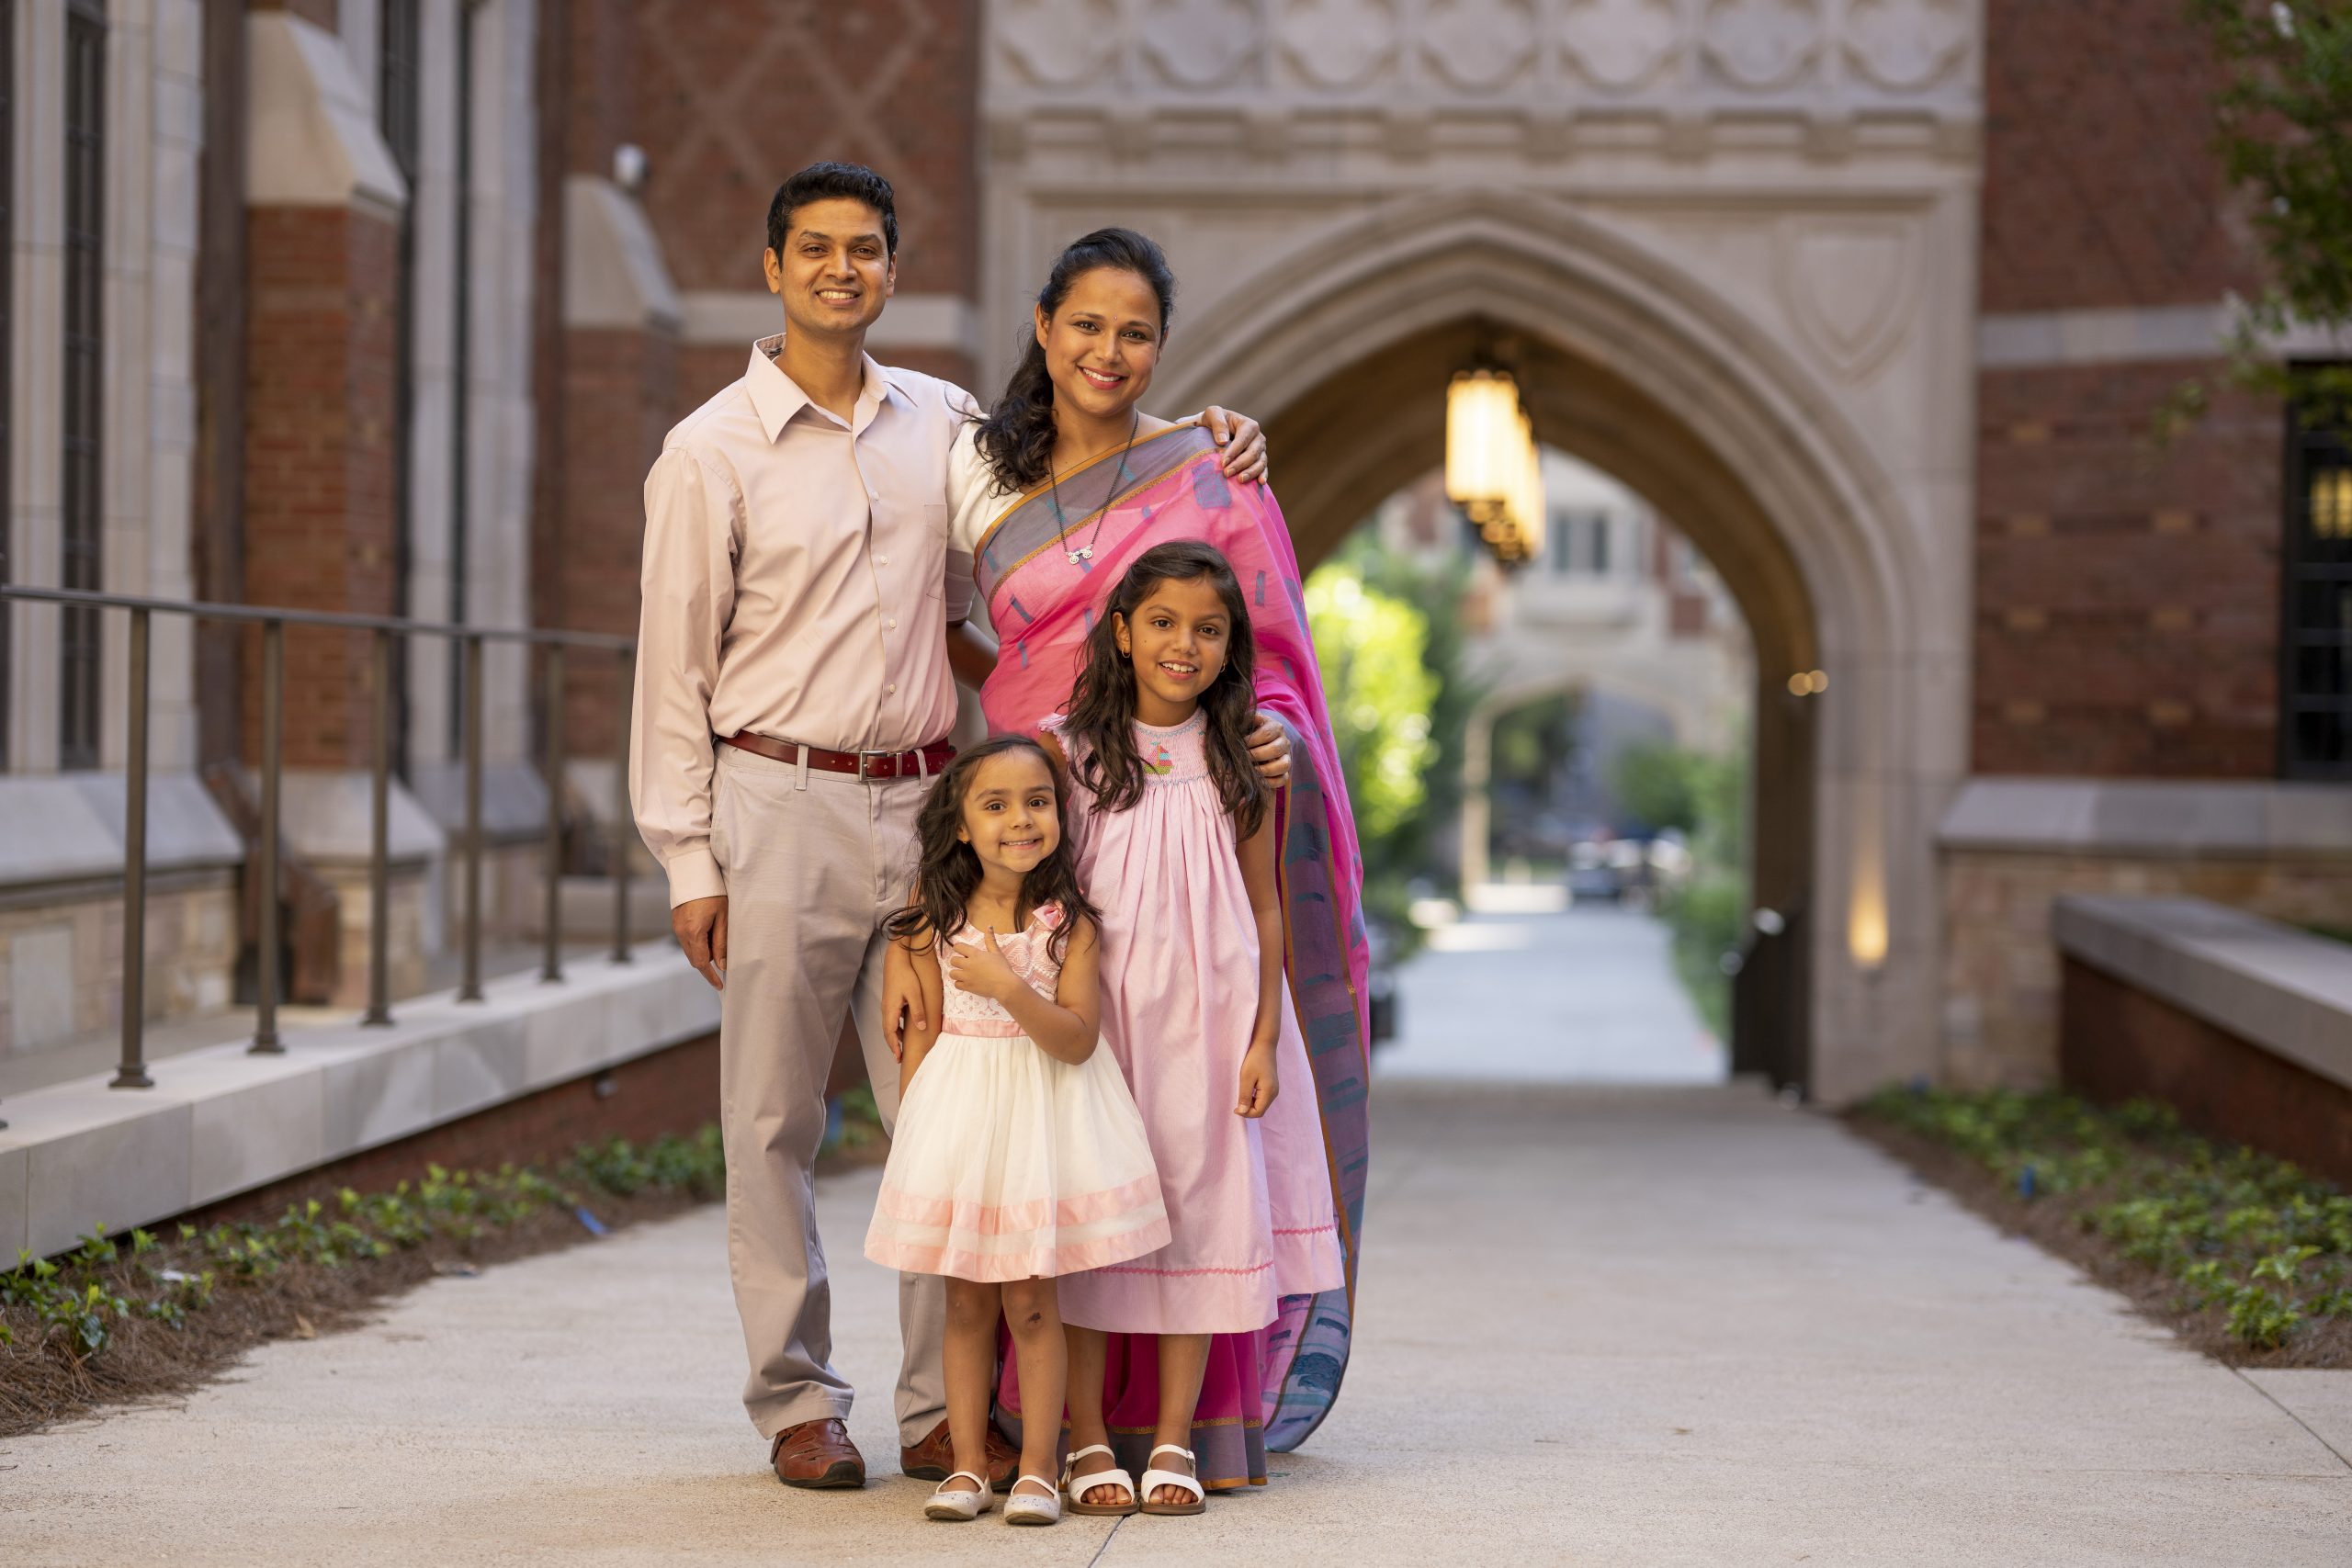 Get to know Vanderbilt’s new residential faculty: Ravindra Duddu